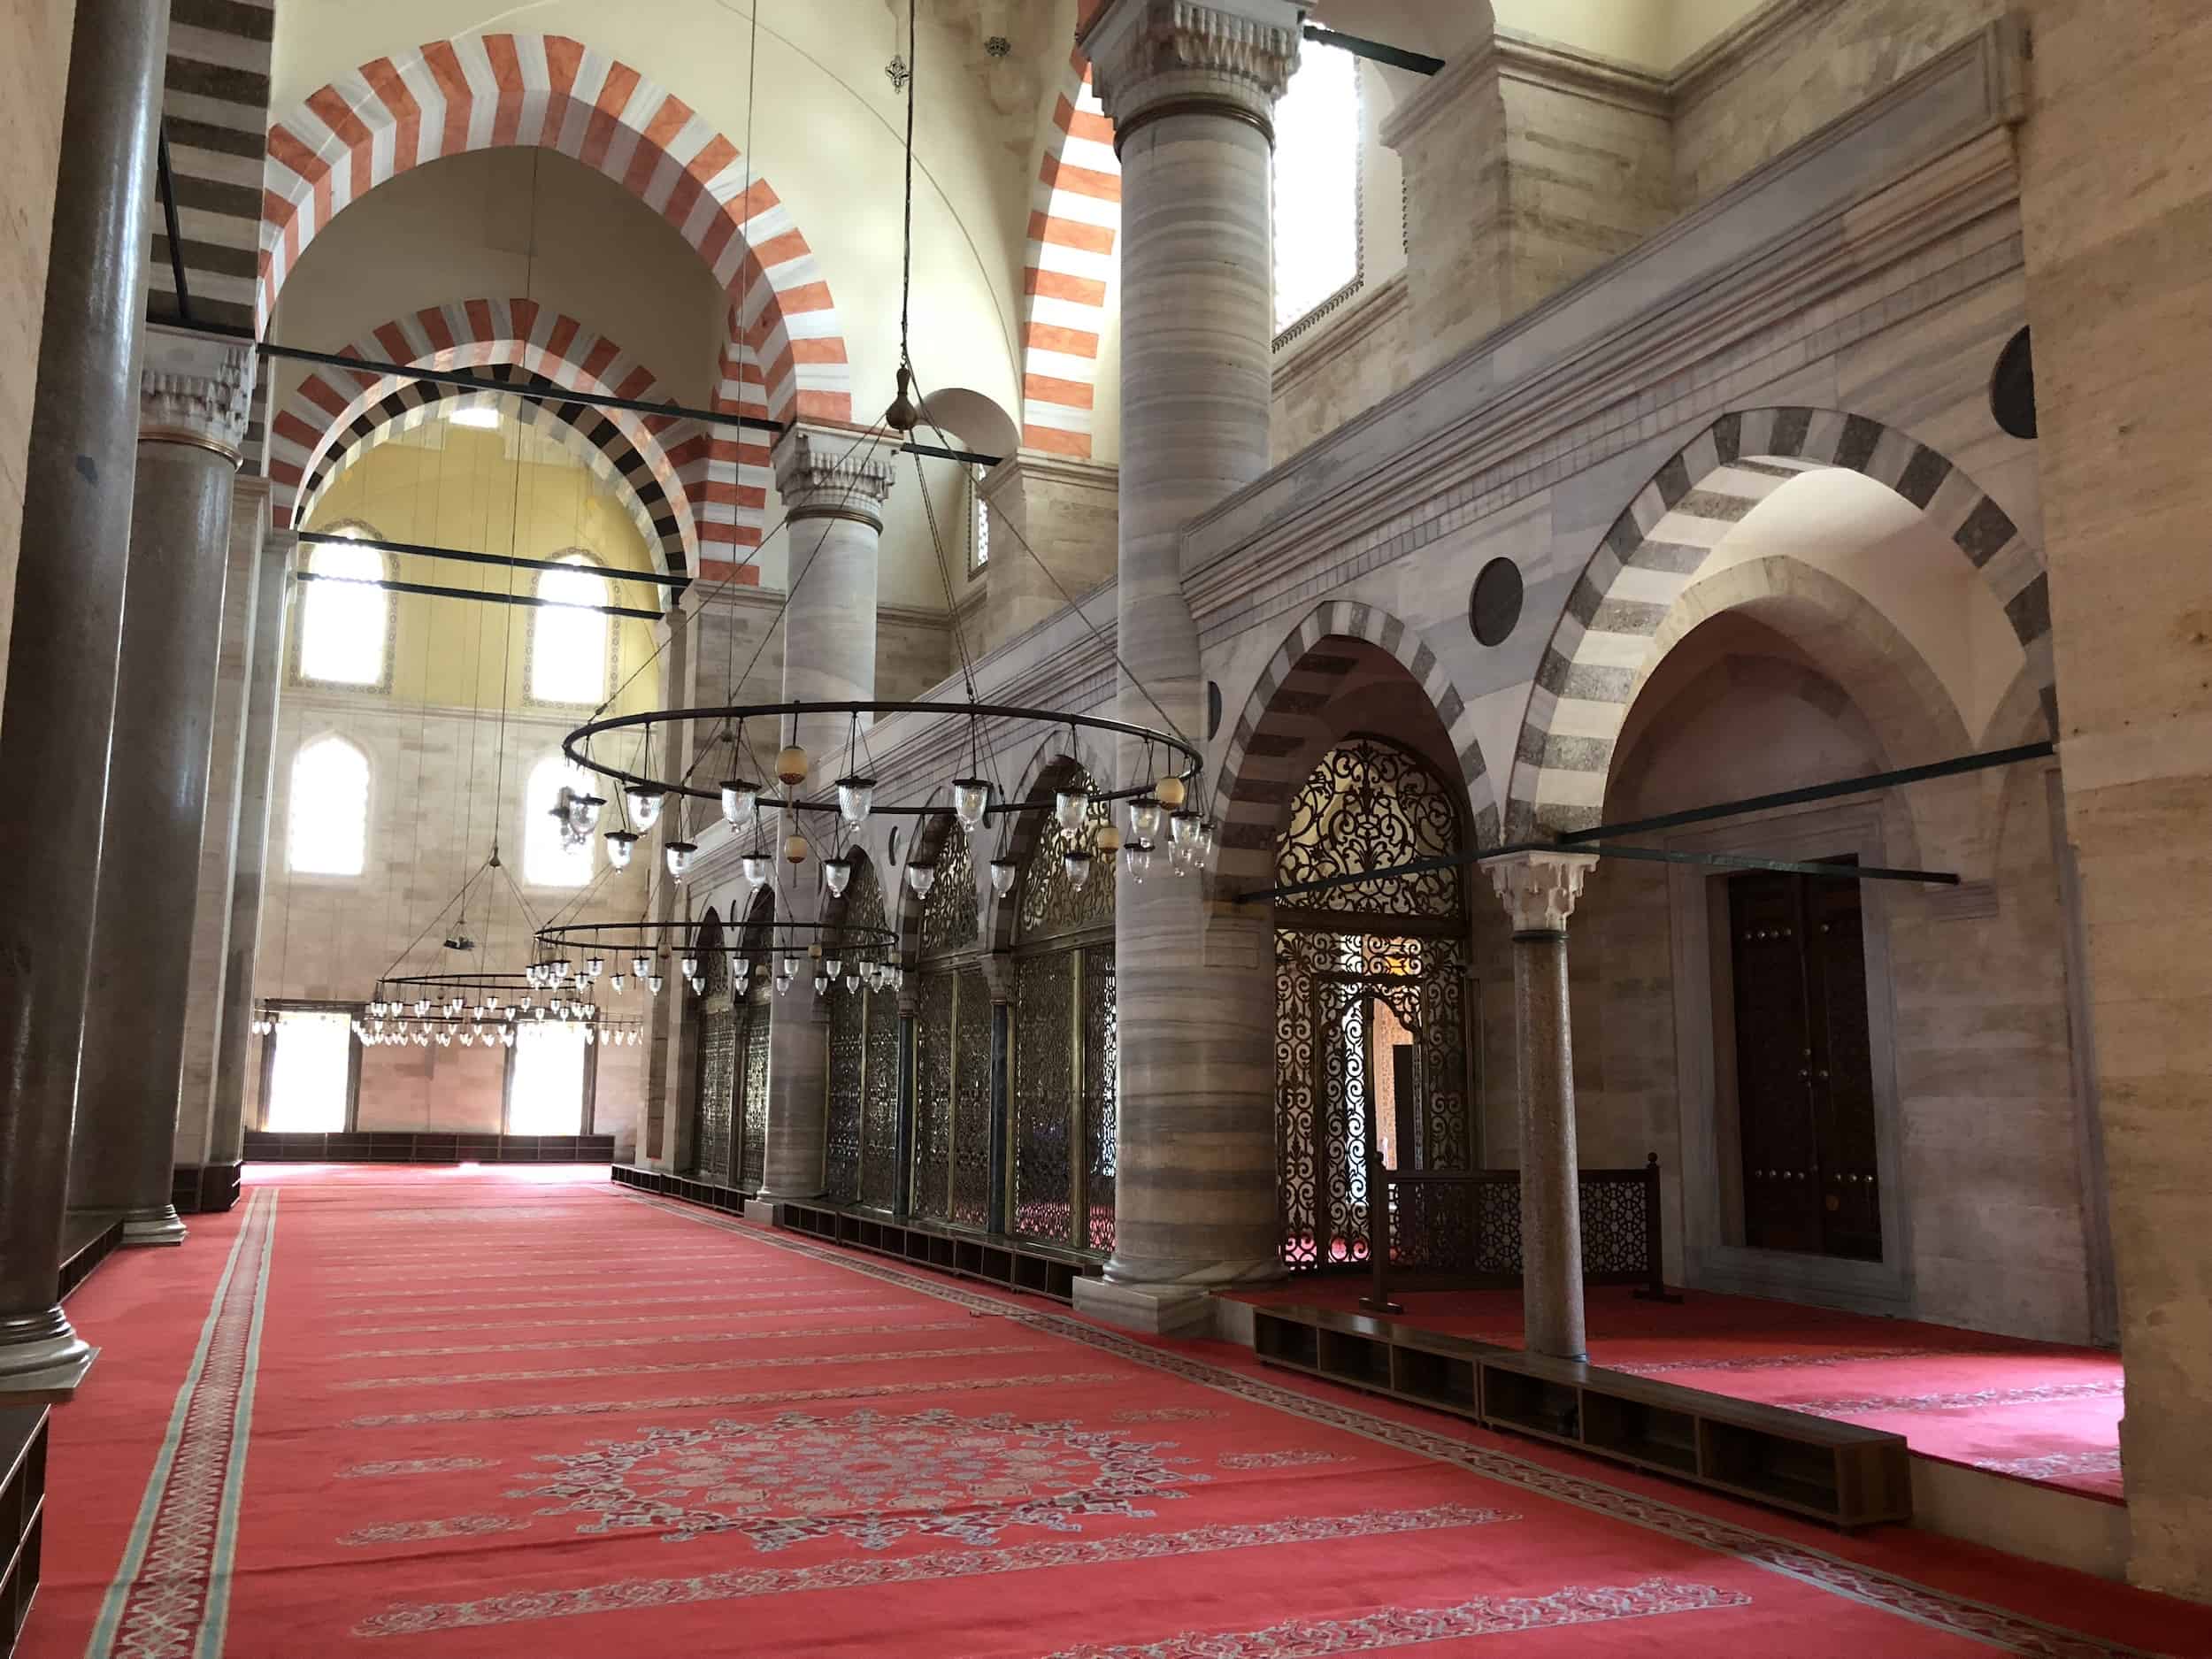 South aisle of the Süleymaniye Mosque in Istanbul, Turkey